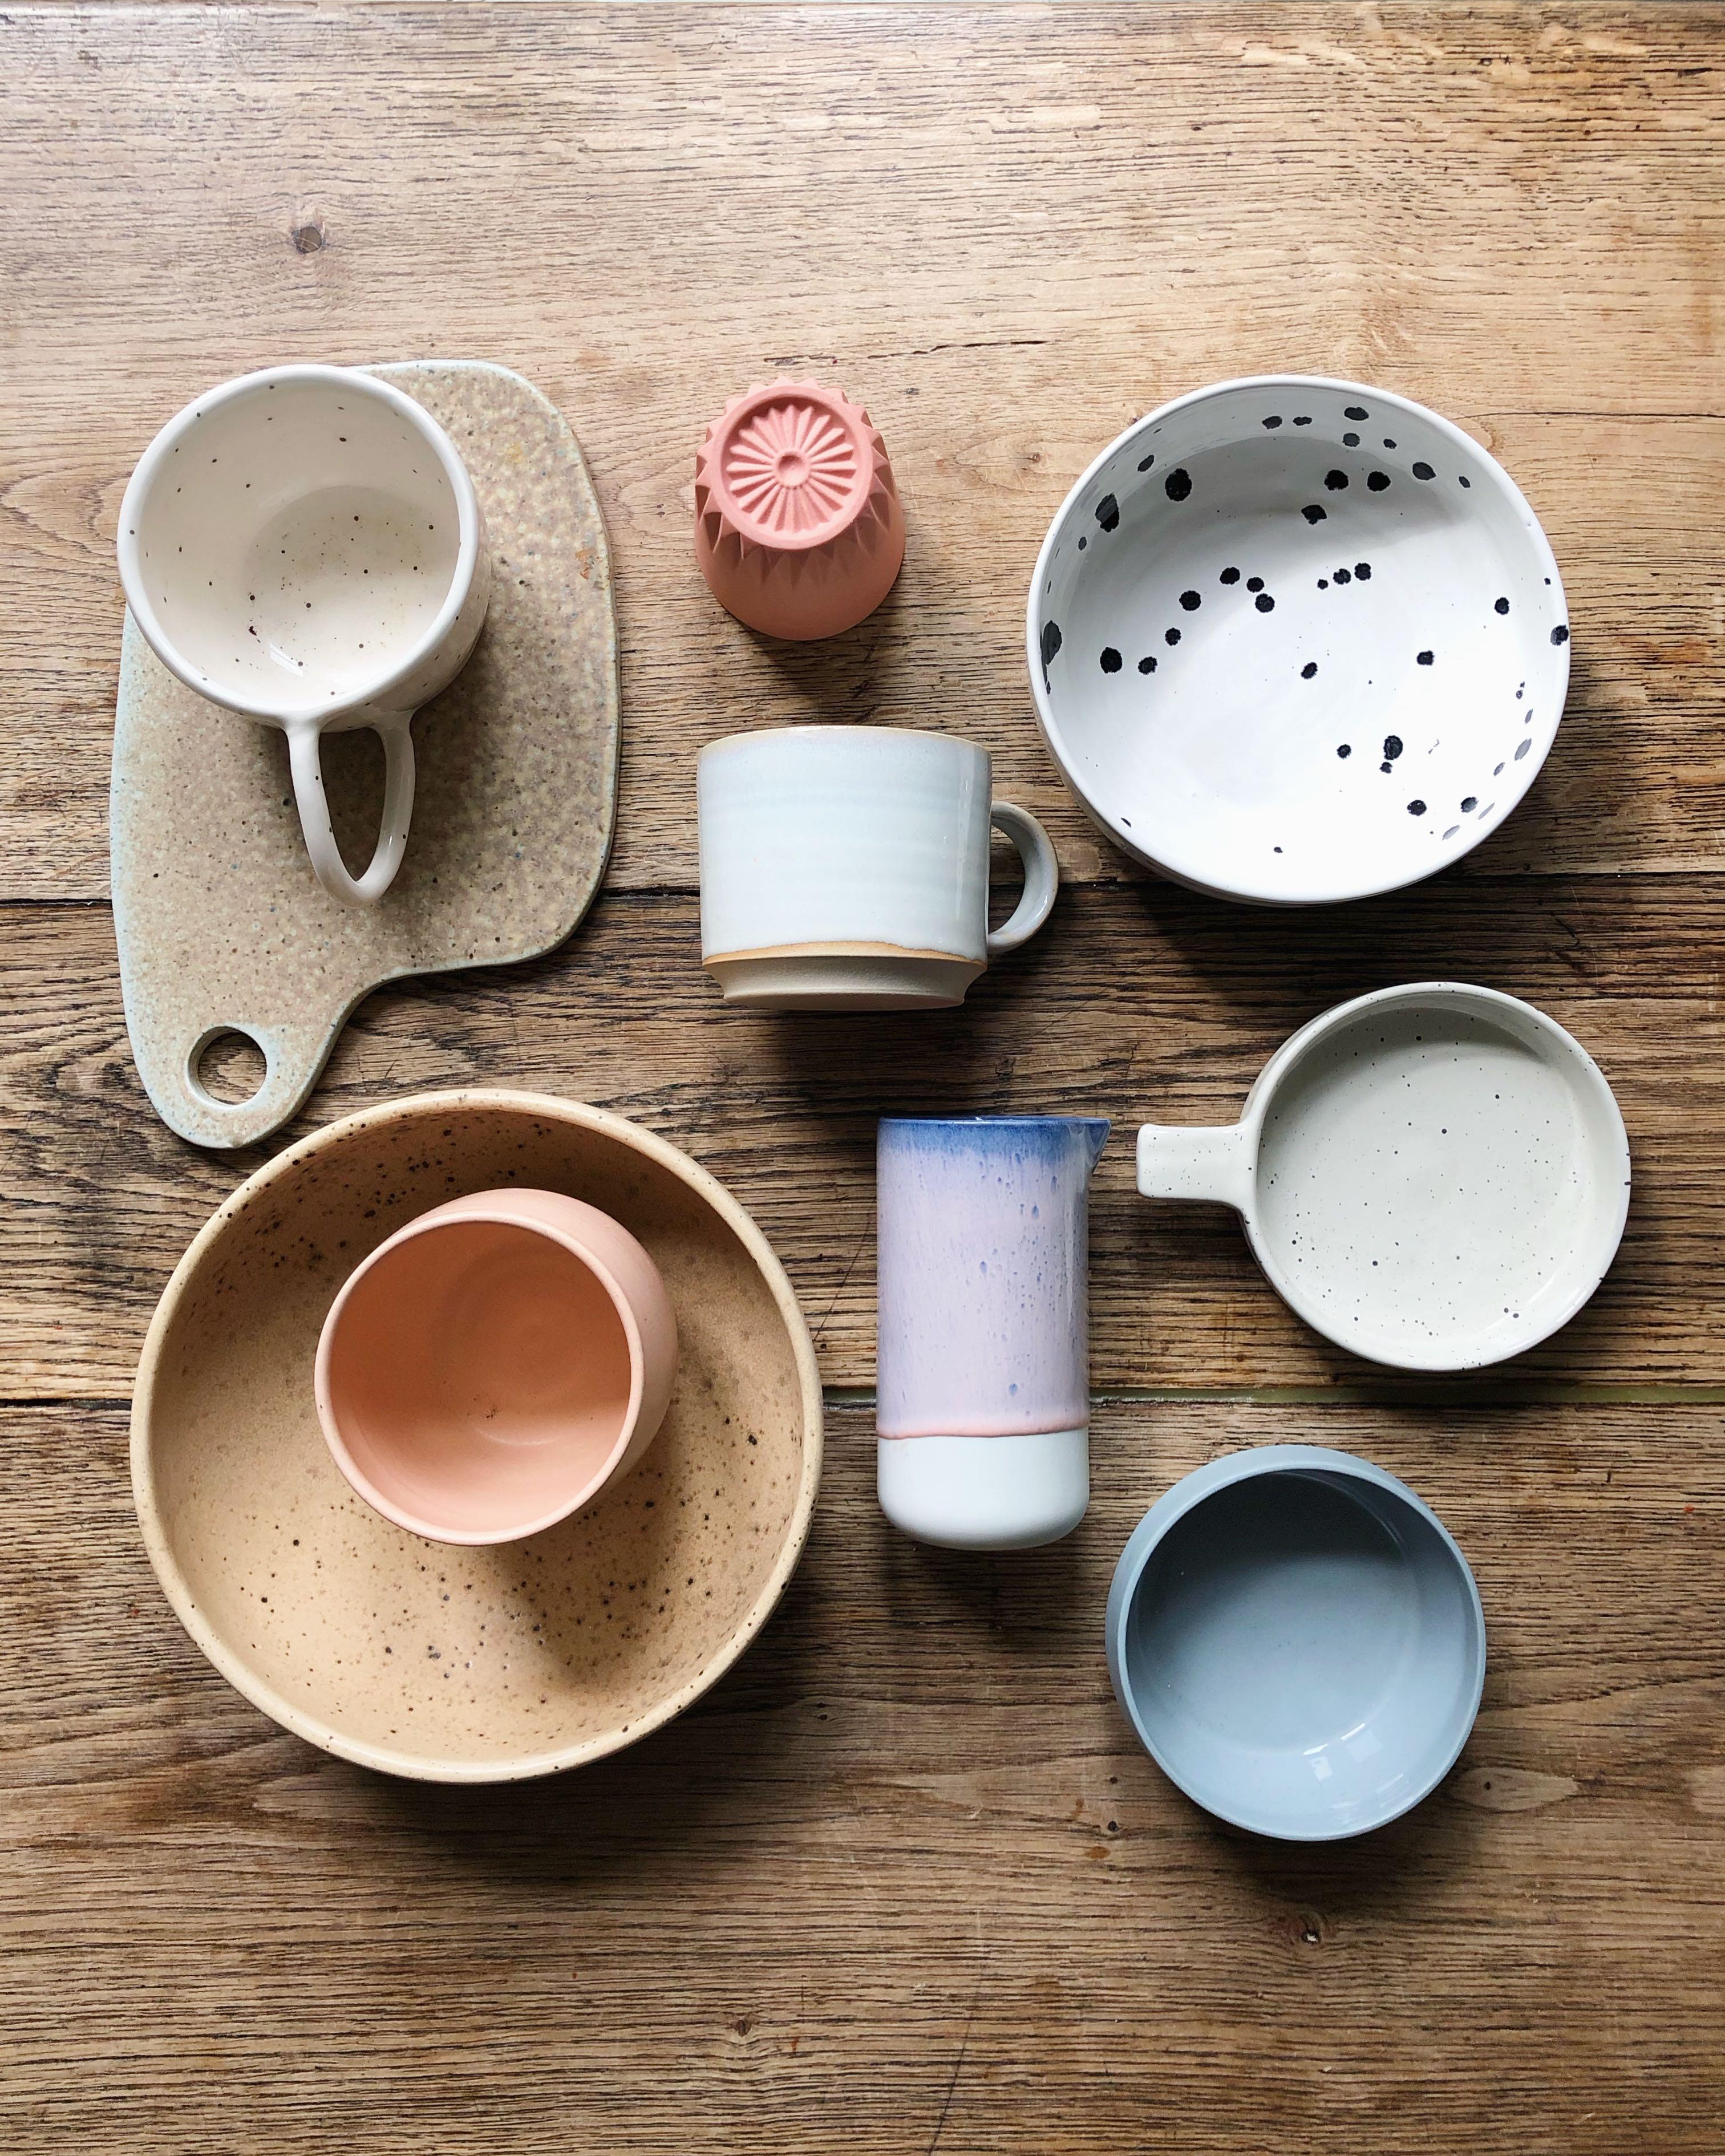 #ceramiclove #ceramics #handmadelove @Studiobloom_design